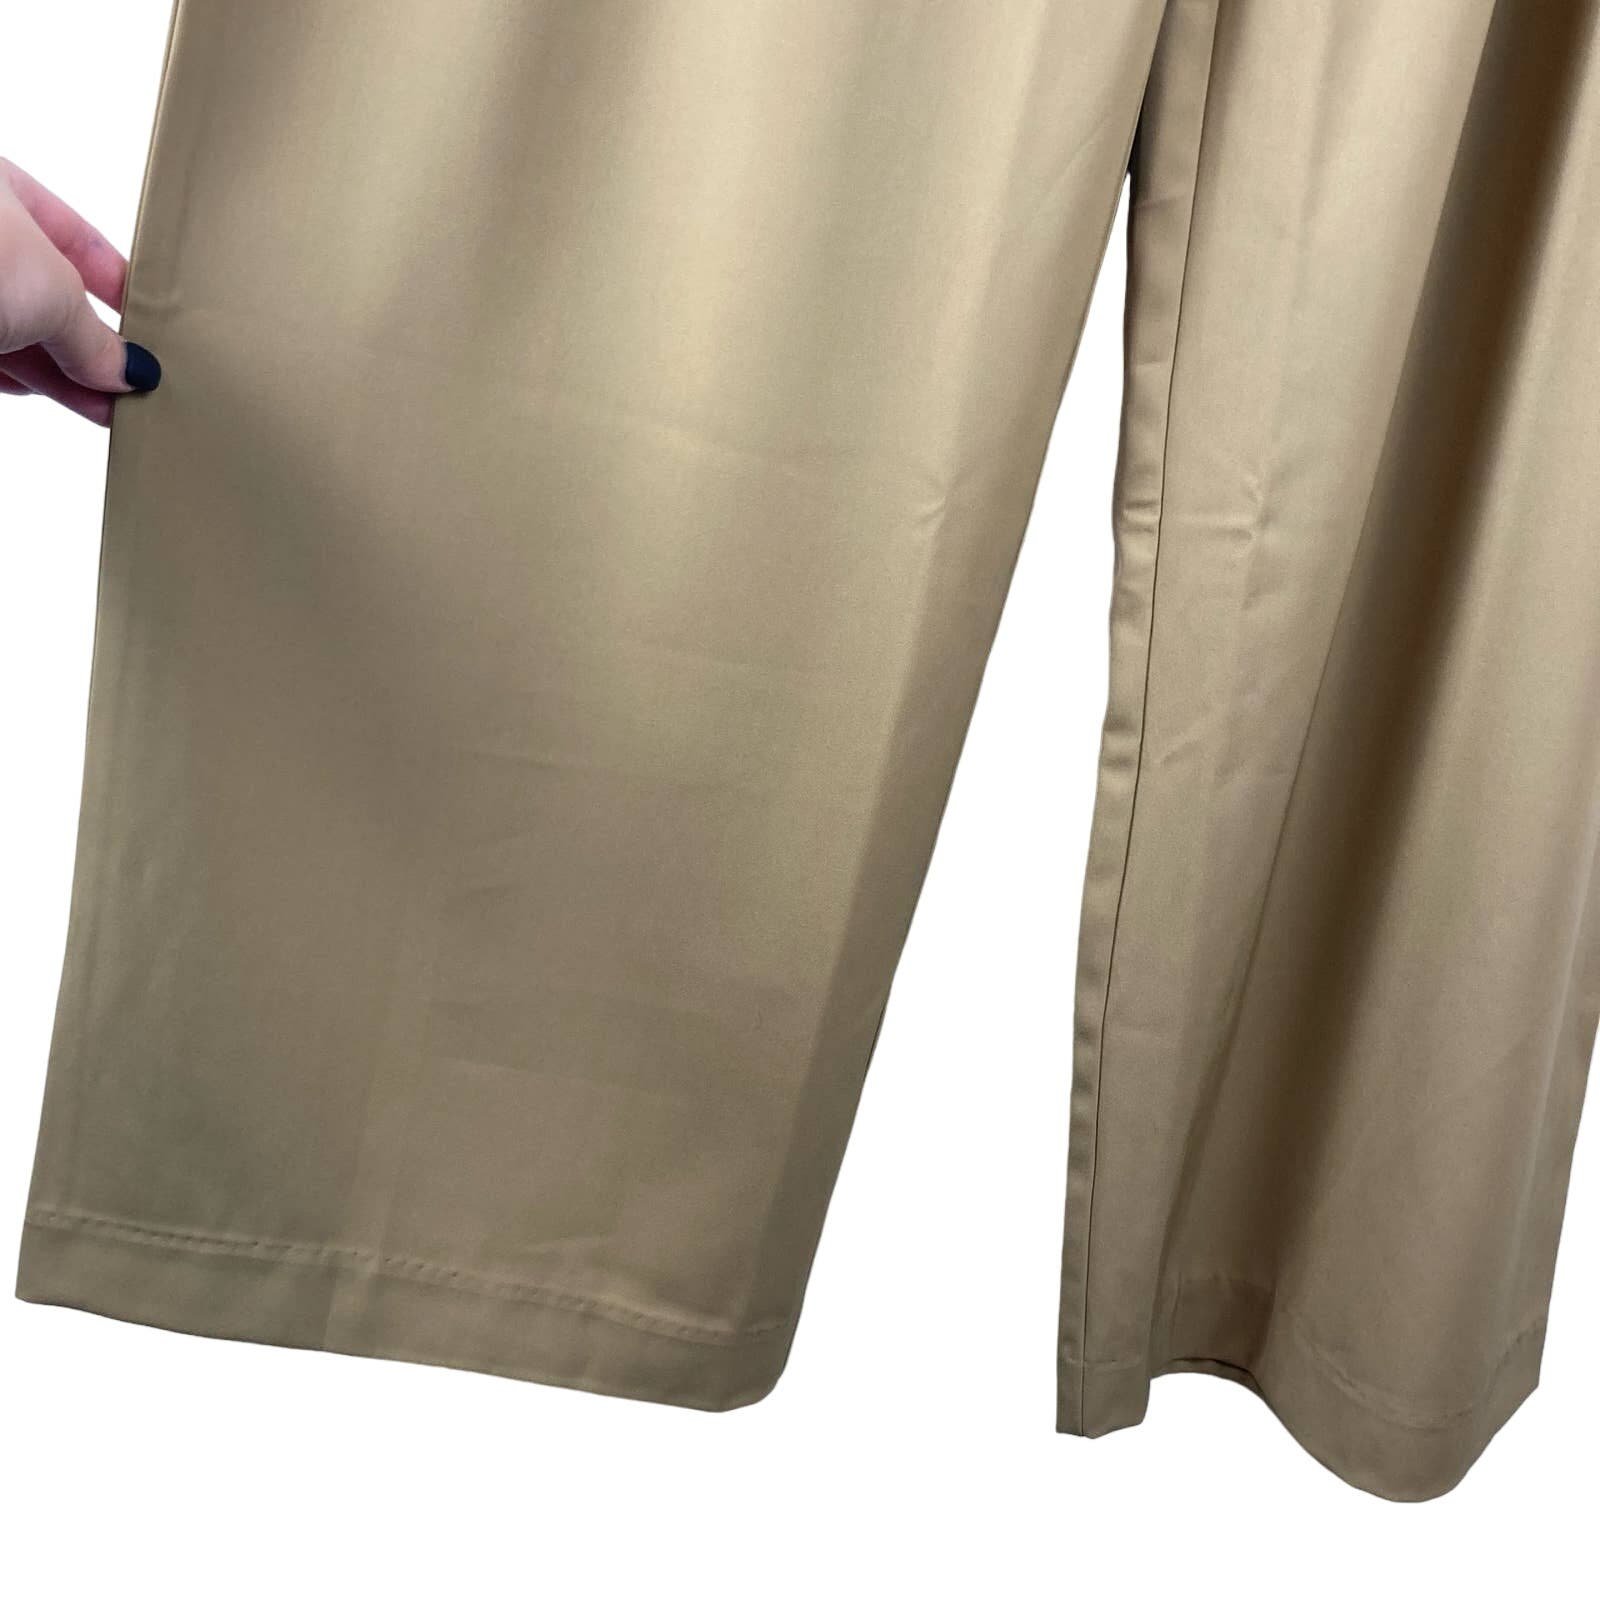 Fashion Modern Citizen Brown High-Rise Kobi Pants Elastic Waist Women´s Size Small ixSqdkQxl just buy it